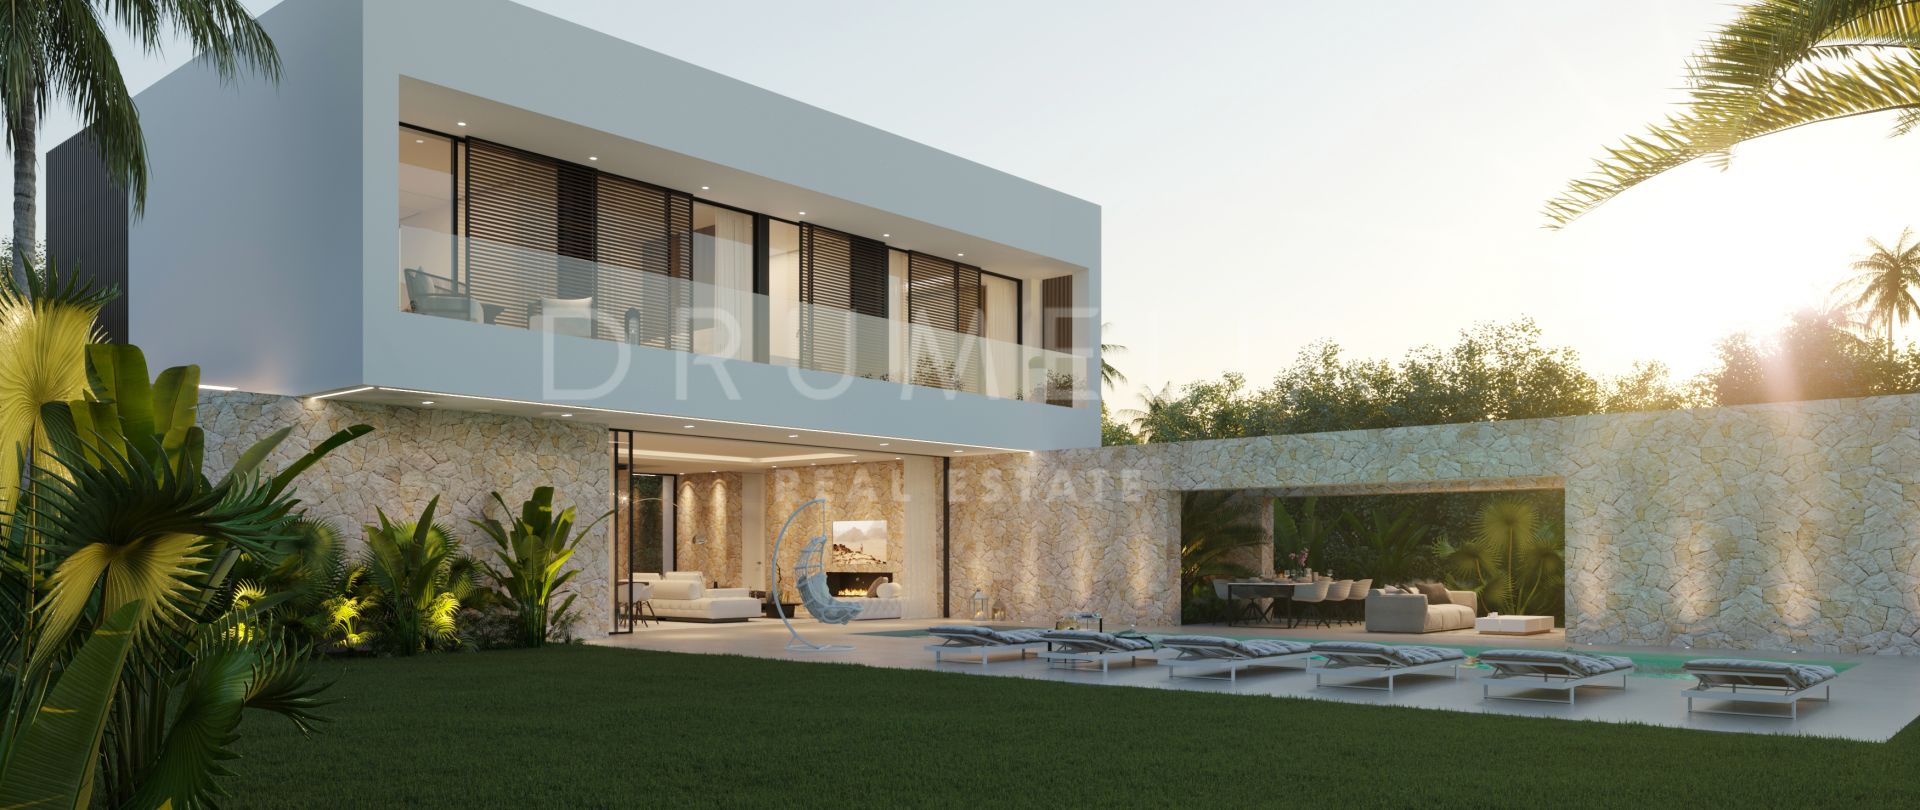 Villa Picasso 20 - Superbe villa en bord de mer dans un nouveau projet haut de gamme, Cortijo Blanco, San Pedro.